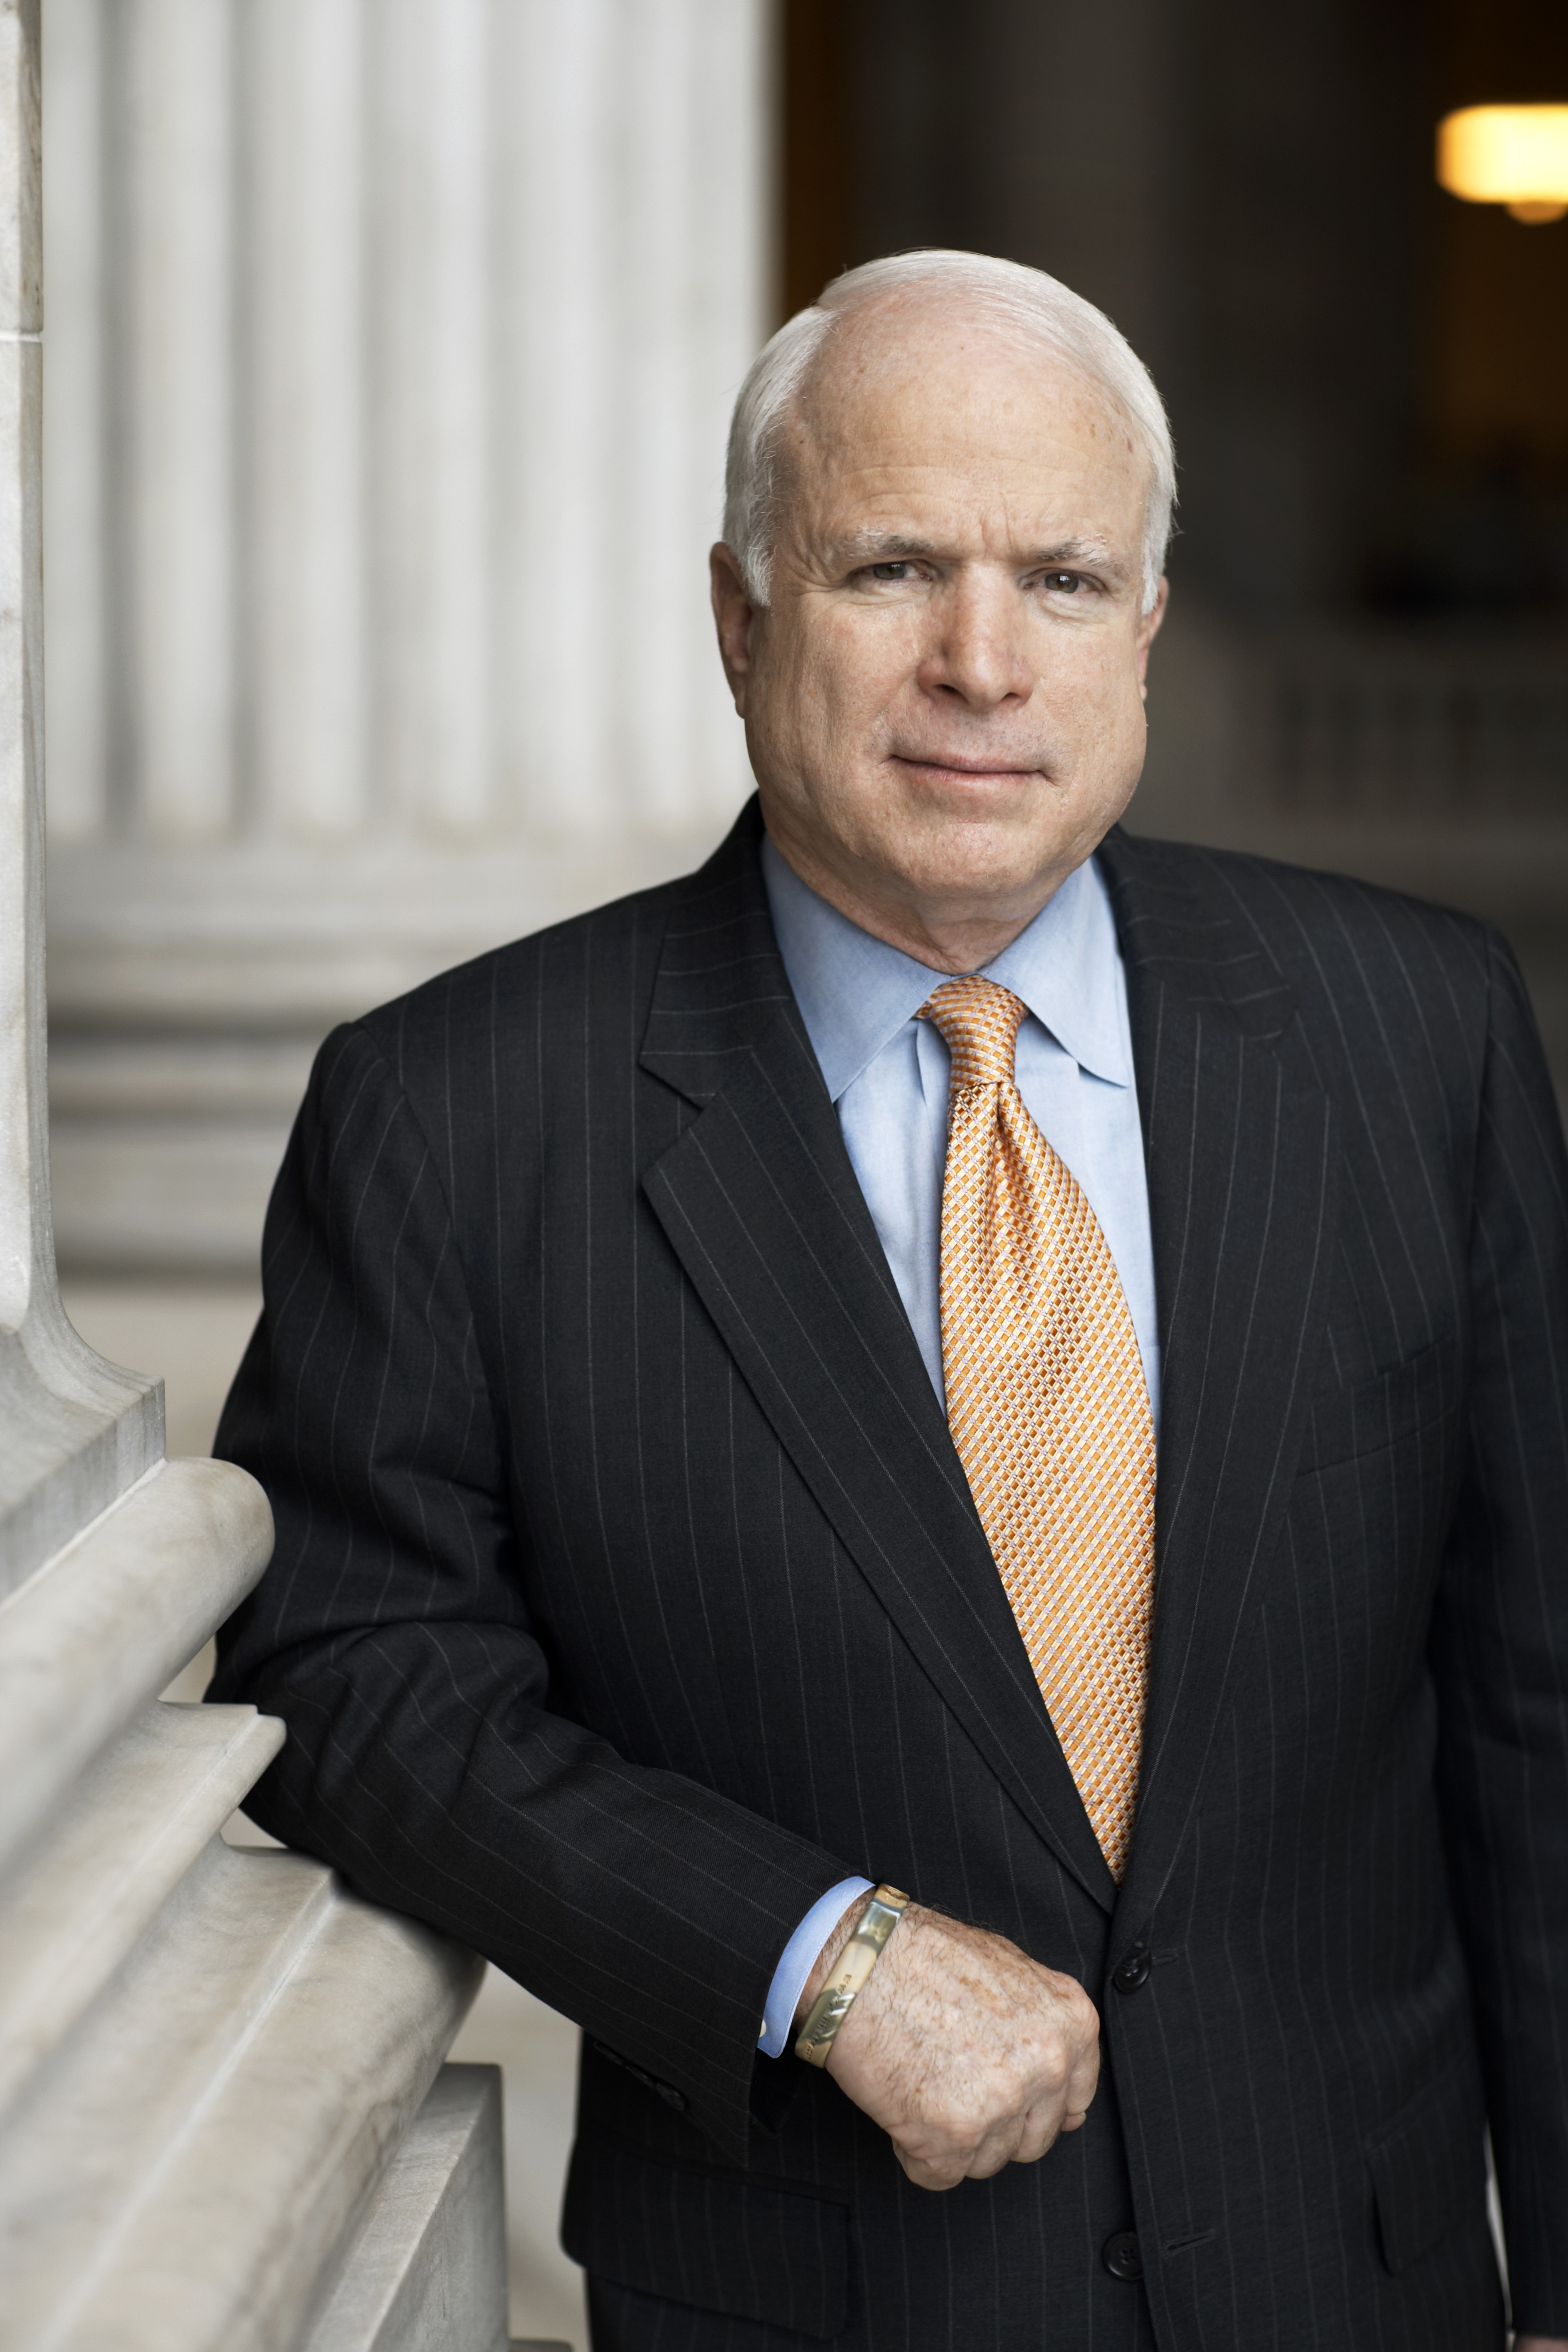 McCain Mistake?